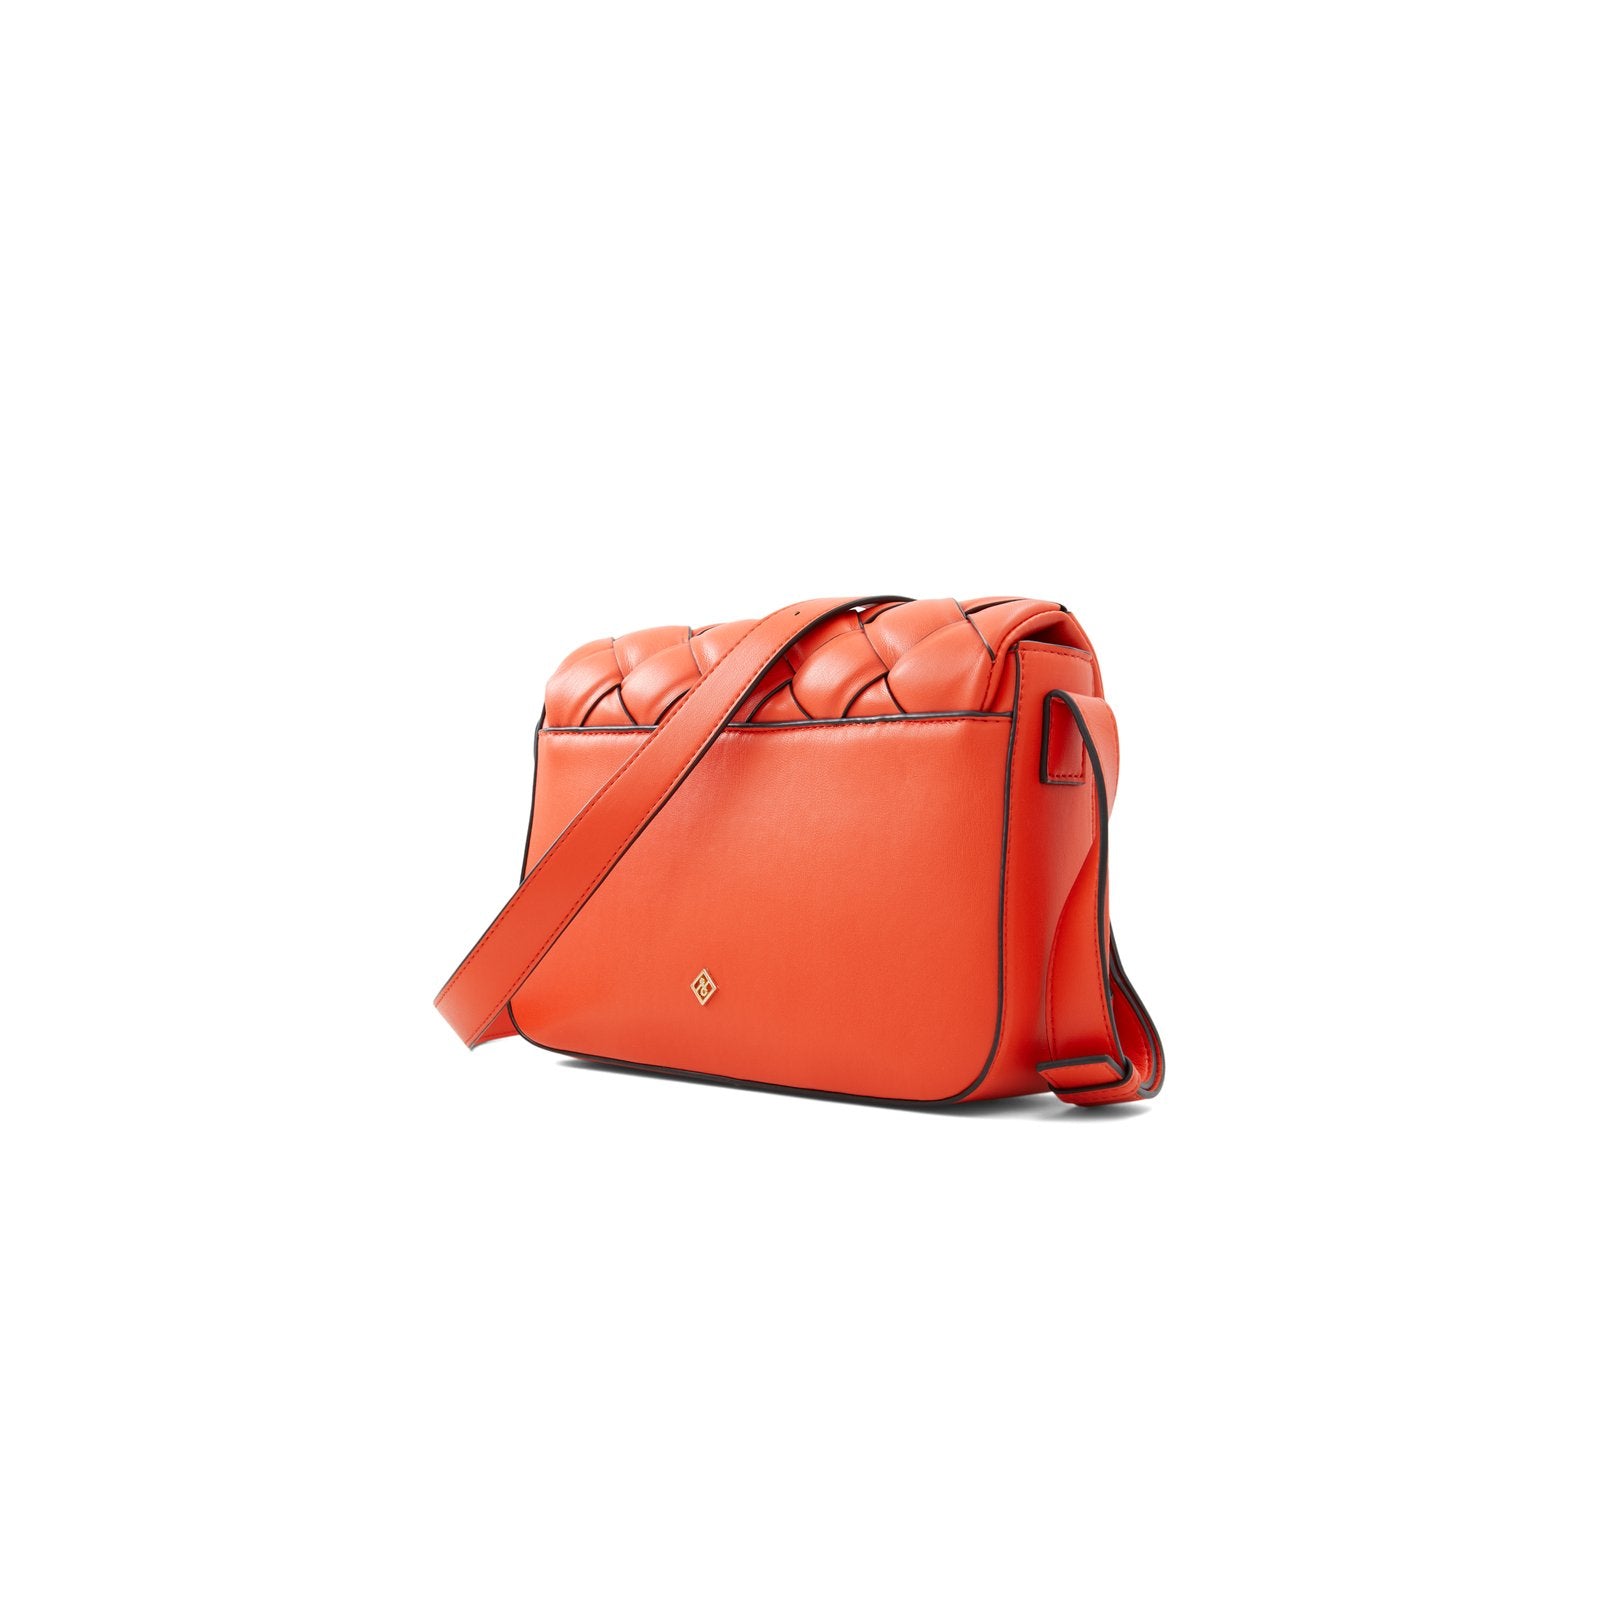 Crisscross Bag - Bright Orange - CALL IT SPRING KSA